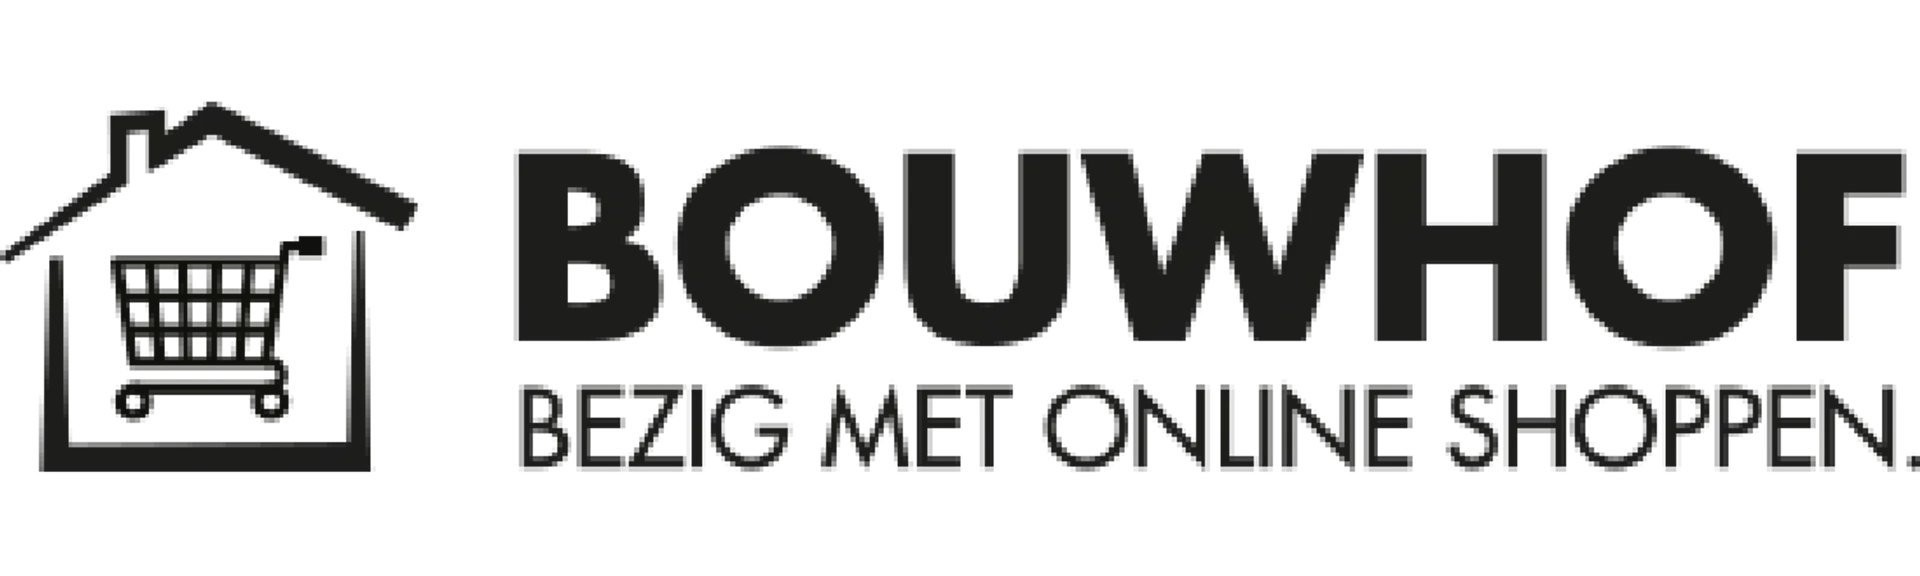 BOUWHOF logo in de folder van deze week